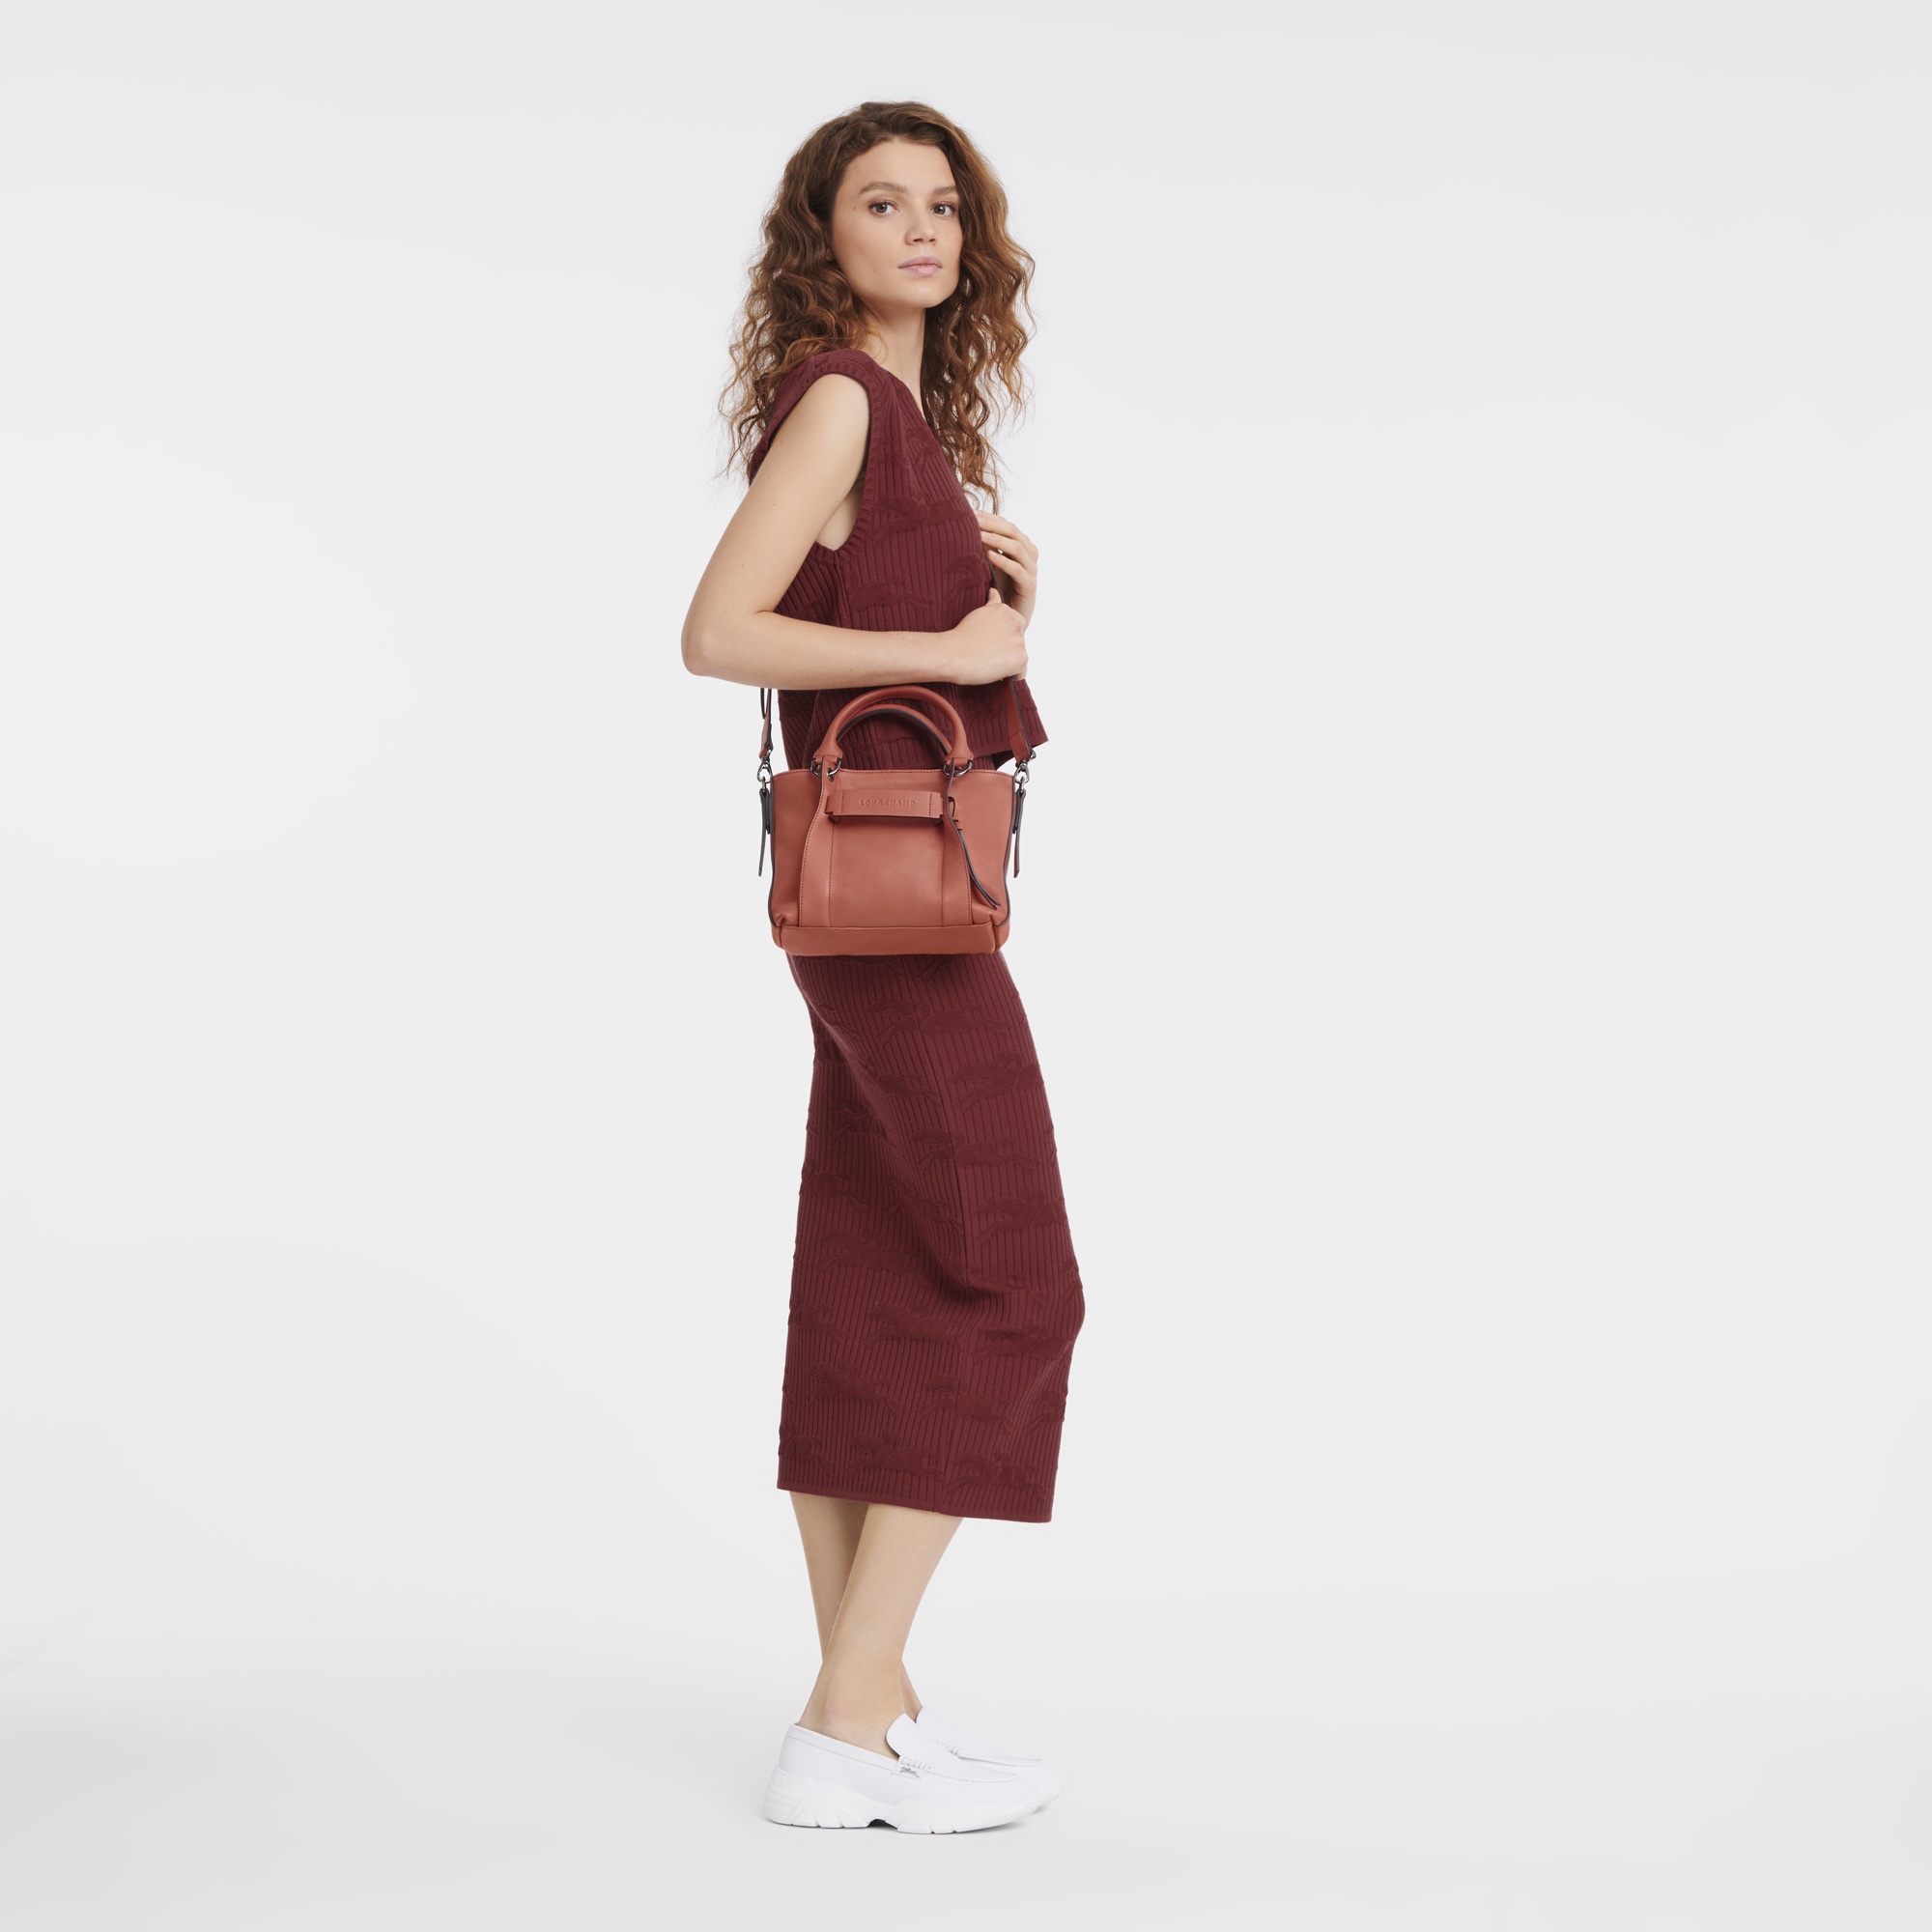 Longchamp 3D S Handbag Sienna - Leather - 2